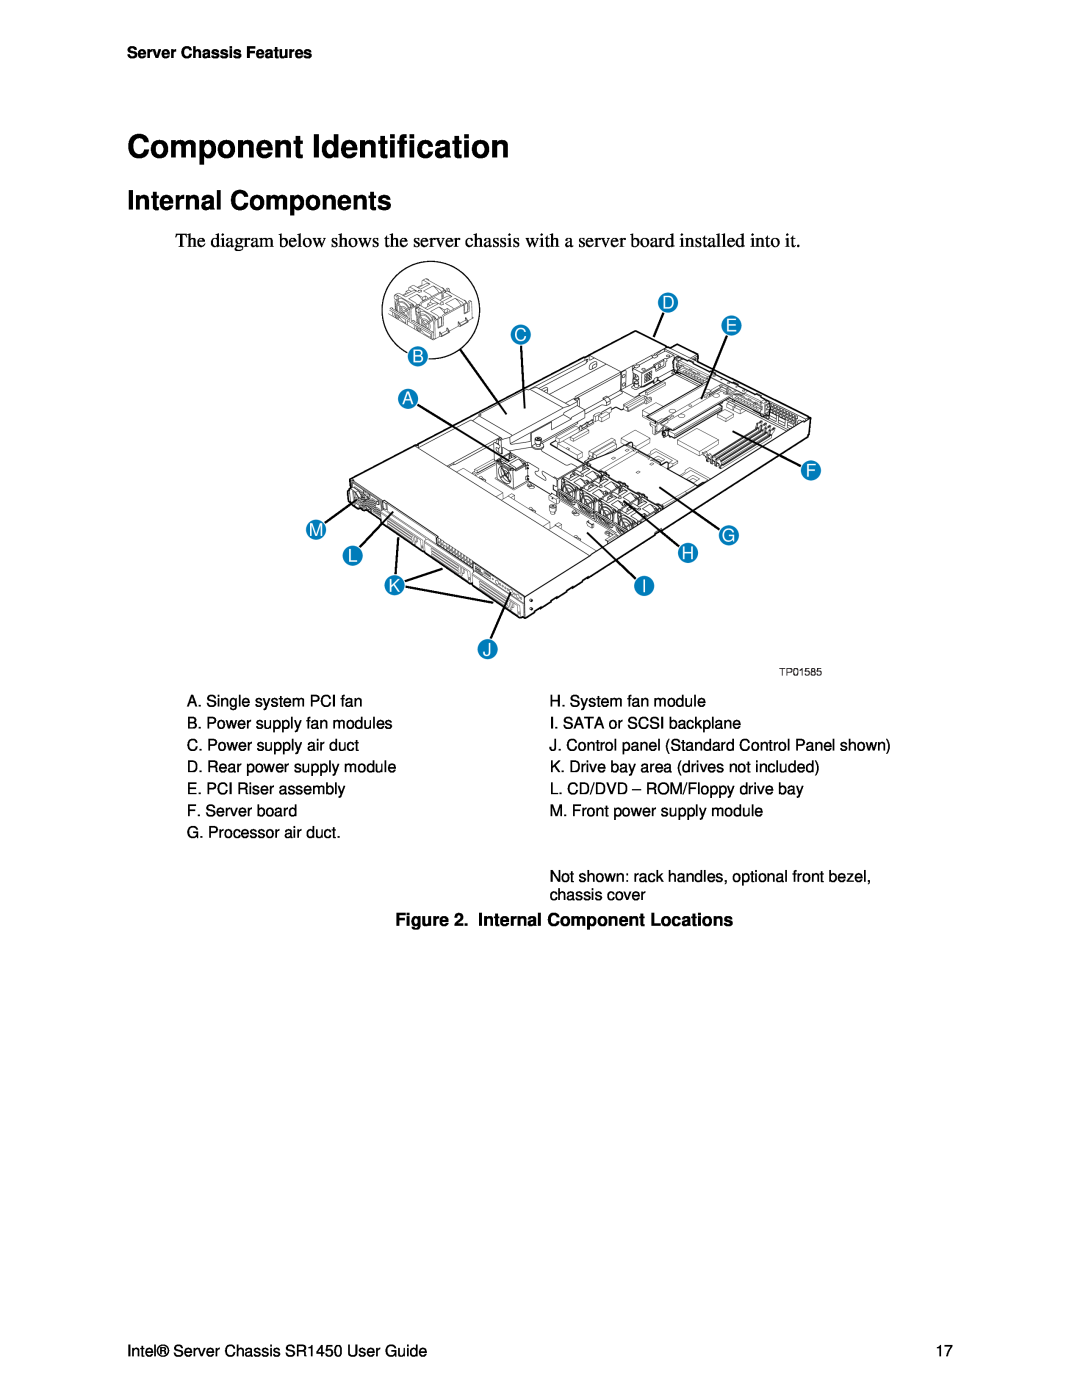 Intel SR1450 manual Component Identification, Internal Components 